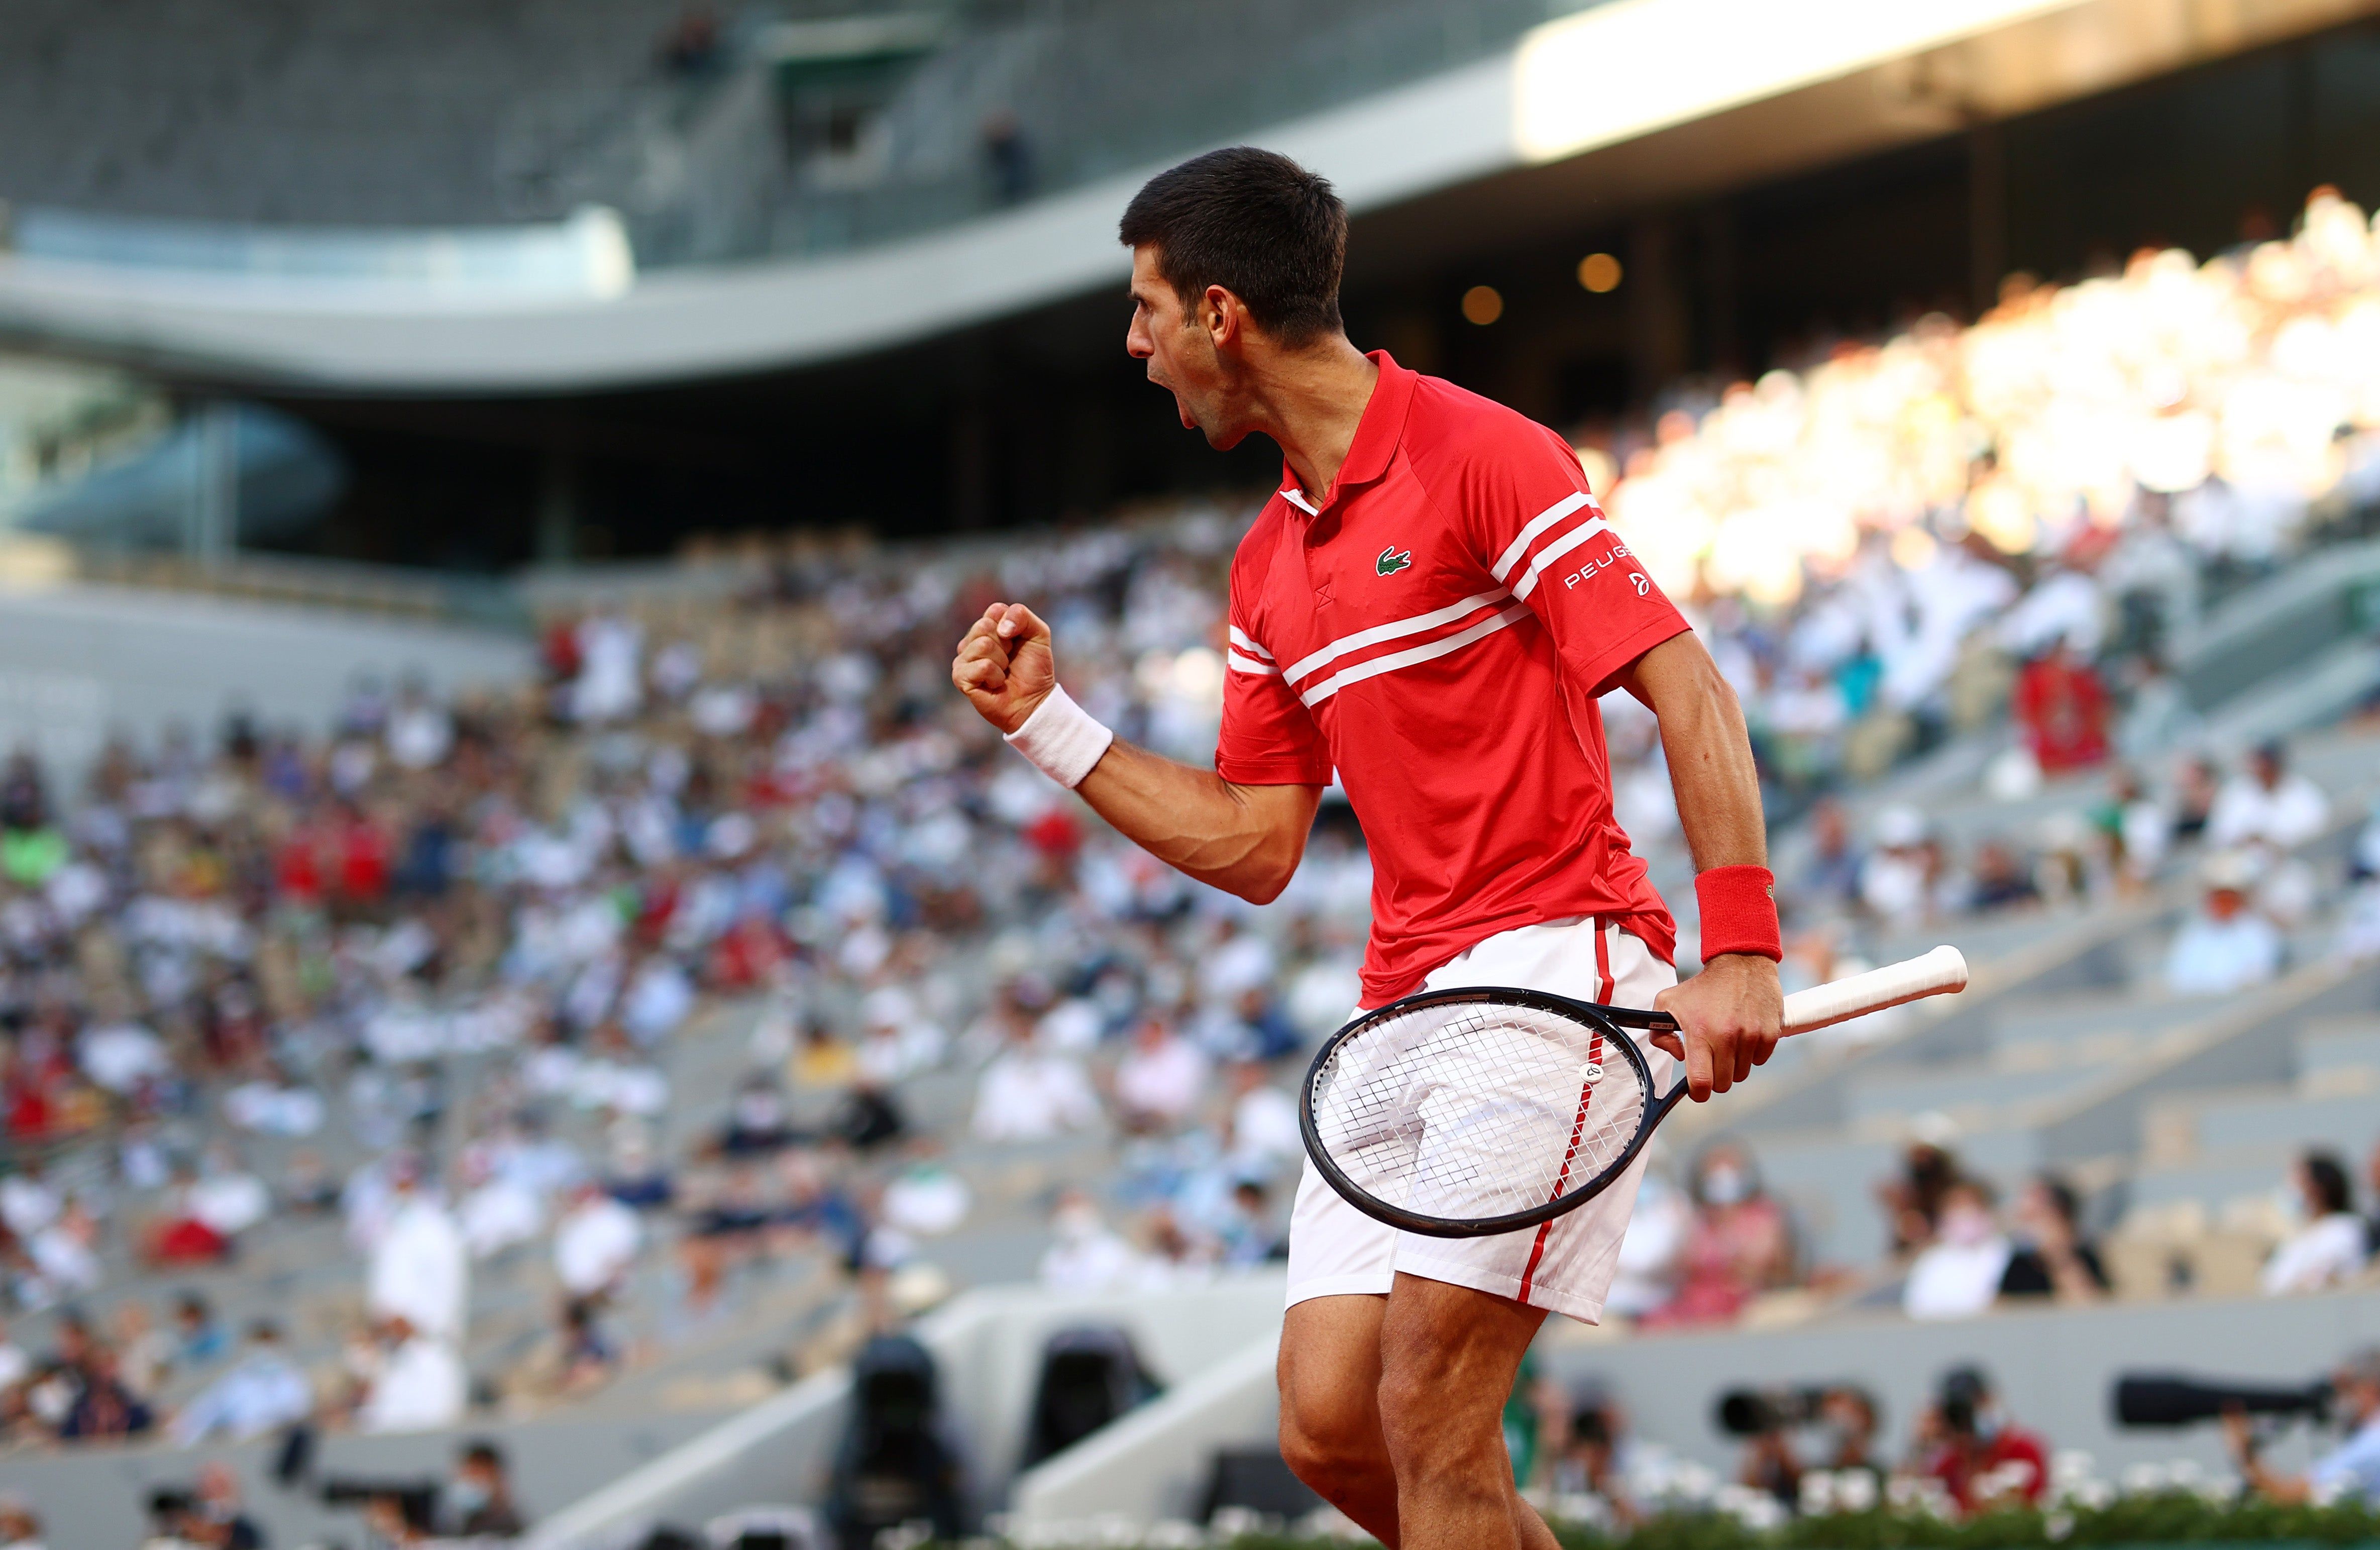 French Open 2021 LIVE: Nadal Vs Djokovic Semi Final Latest Updates From Roland Garros